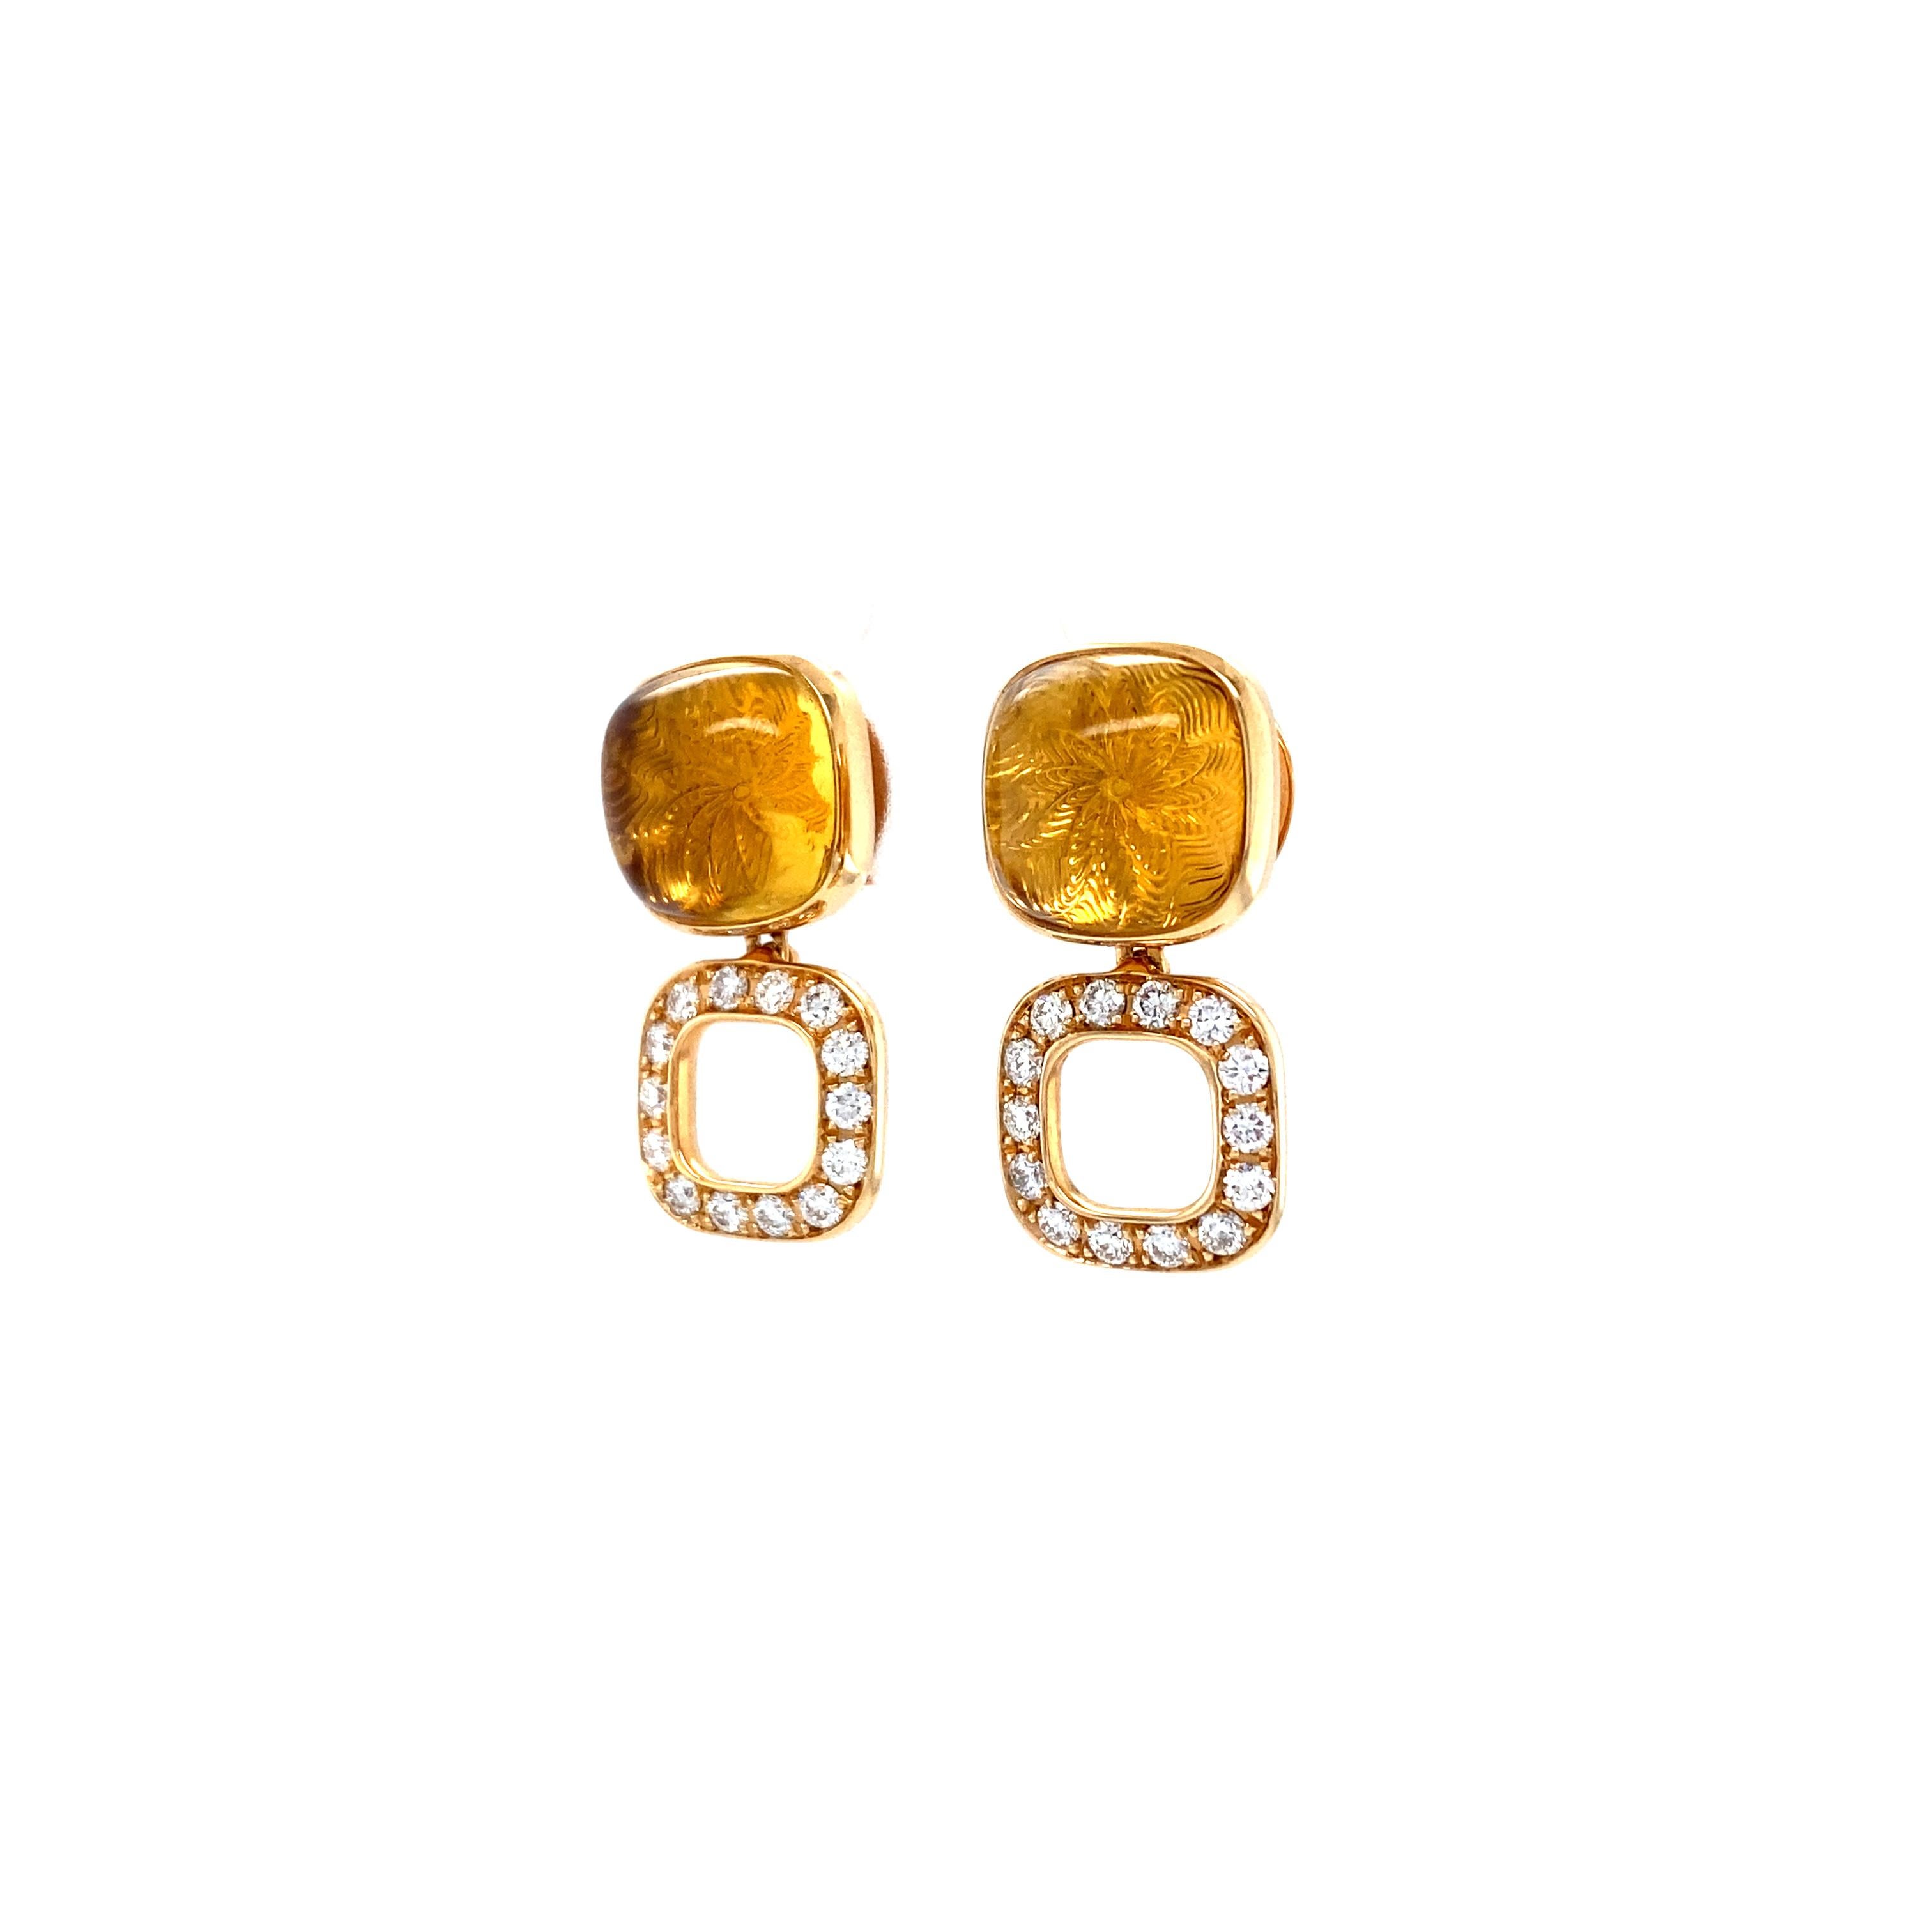 Victor Mayer Gemstone Earrings Era Gold Citrine18k Rose Gold 28 Diamonds 0.70 ct For Sale 4